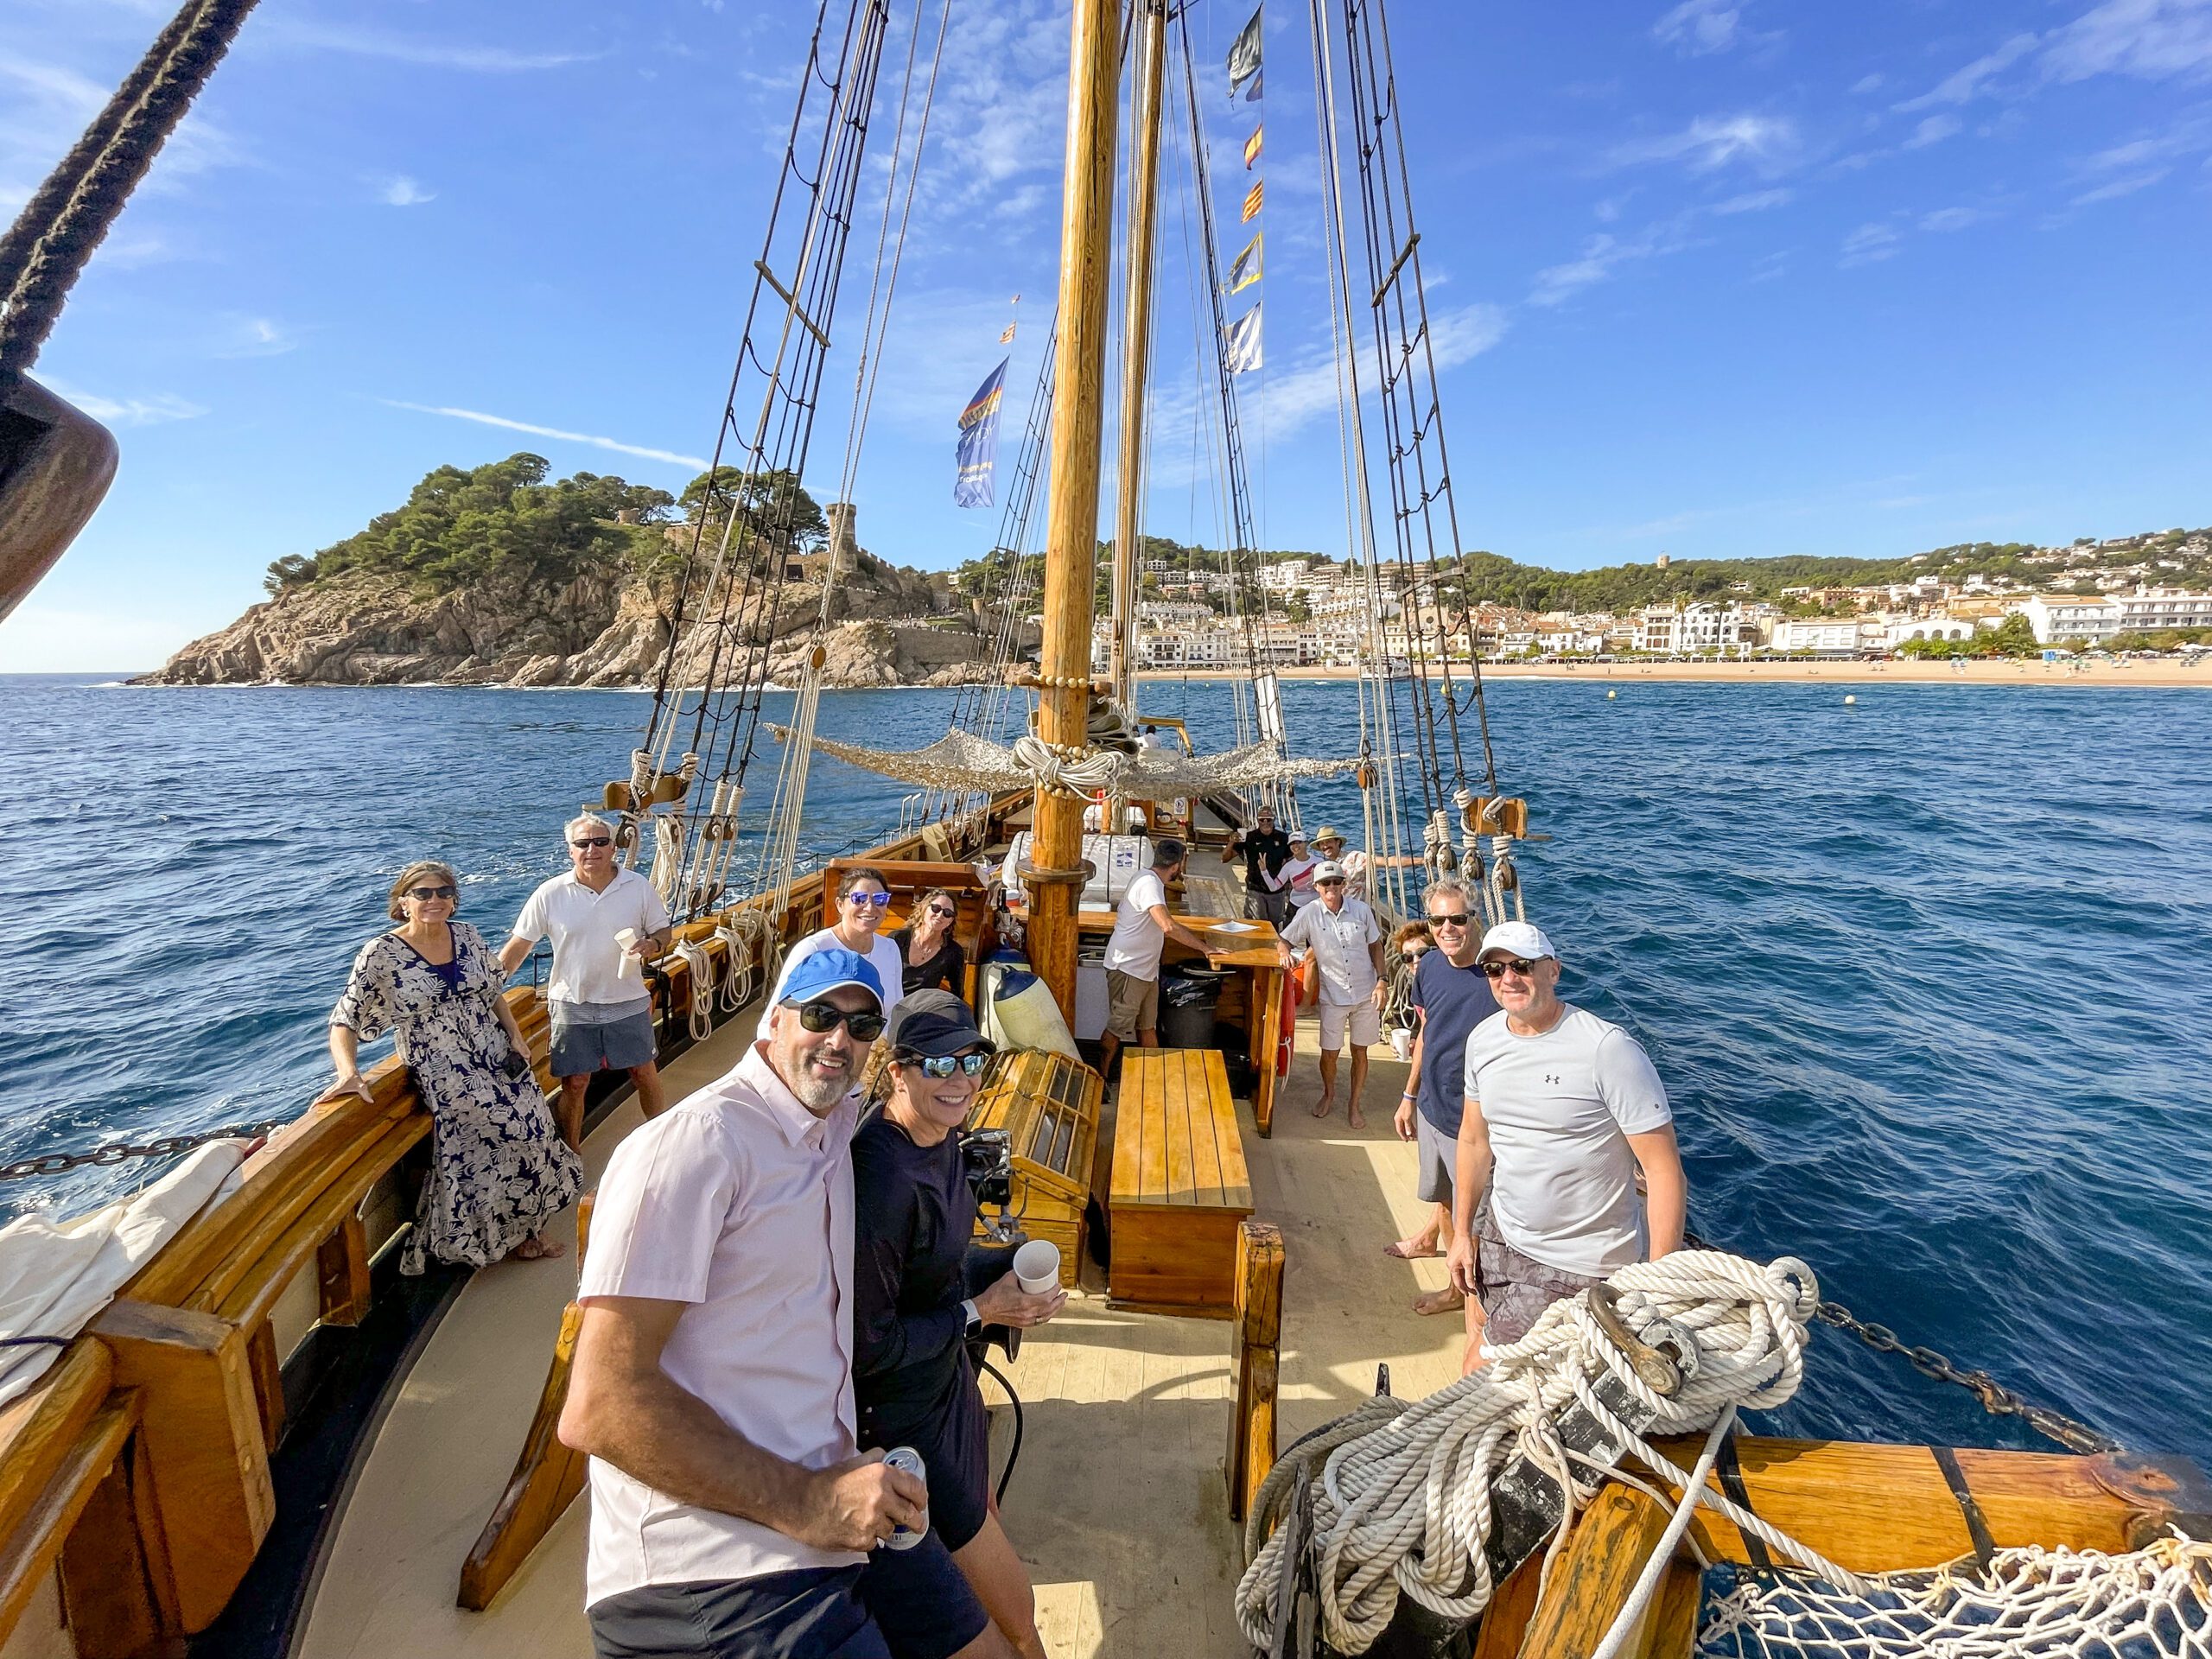 A group boat ride in Costa Brava, Spain.